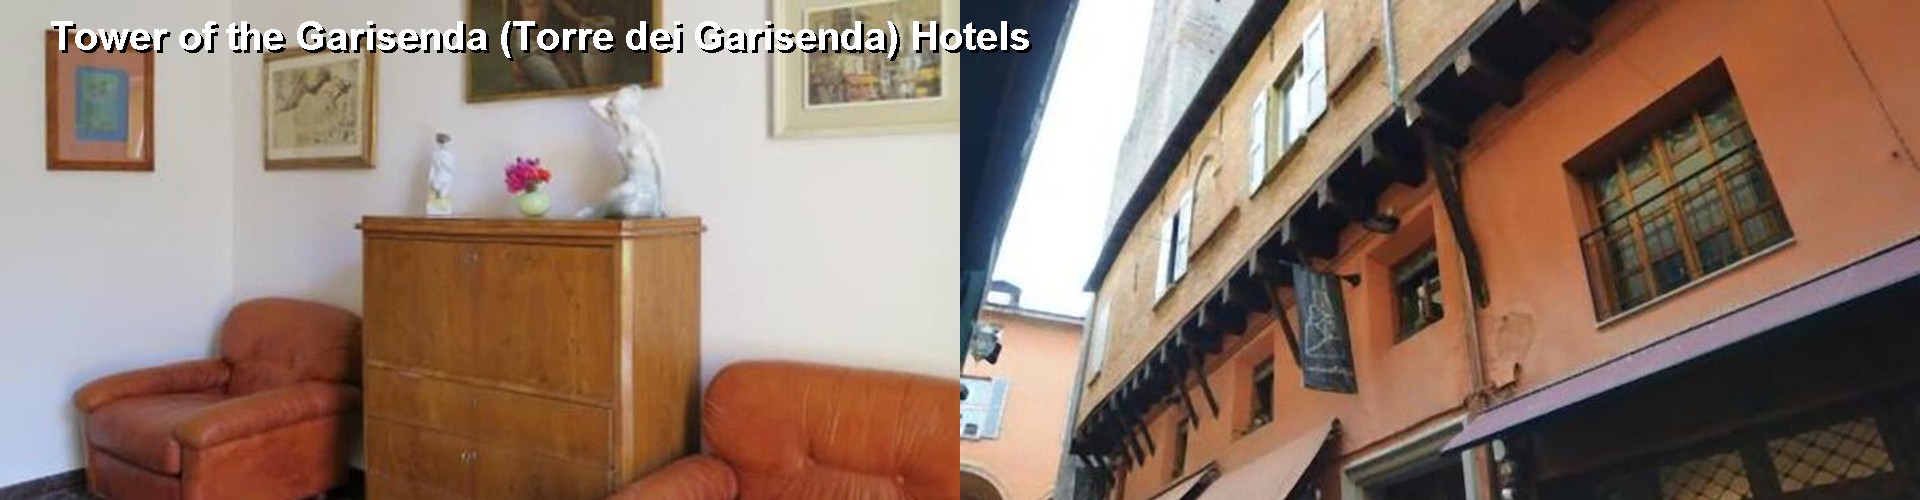 5 Best Hotels near Tower of the Garisenda (Torre dei Garisenda)